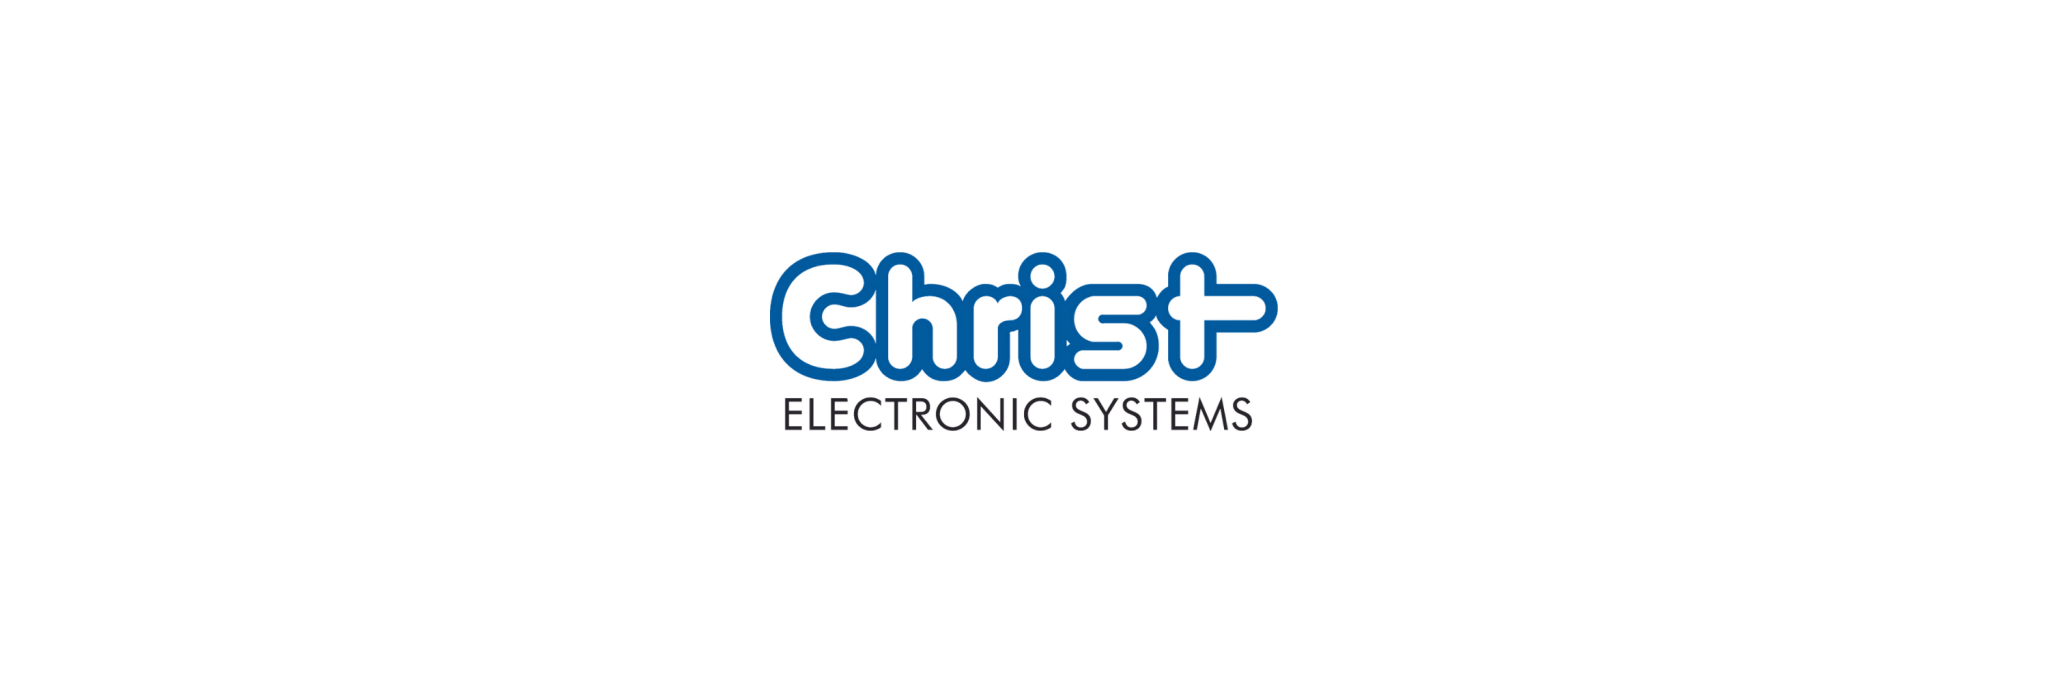 Christ Electronic Systems - Klenk Maschinenhandel